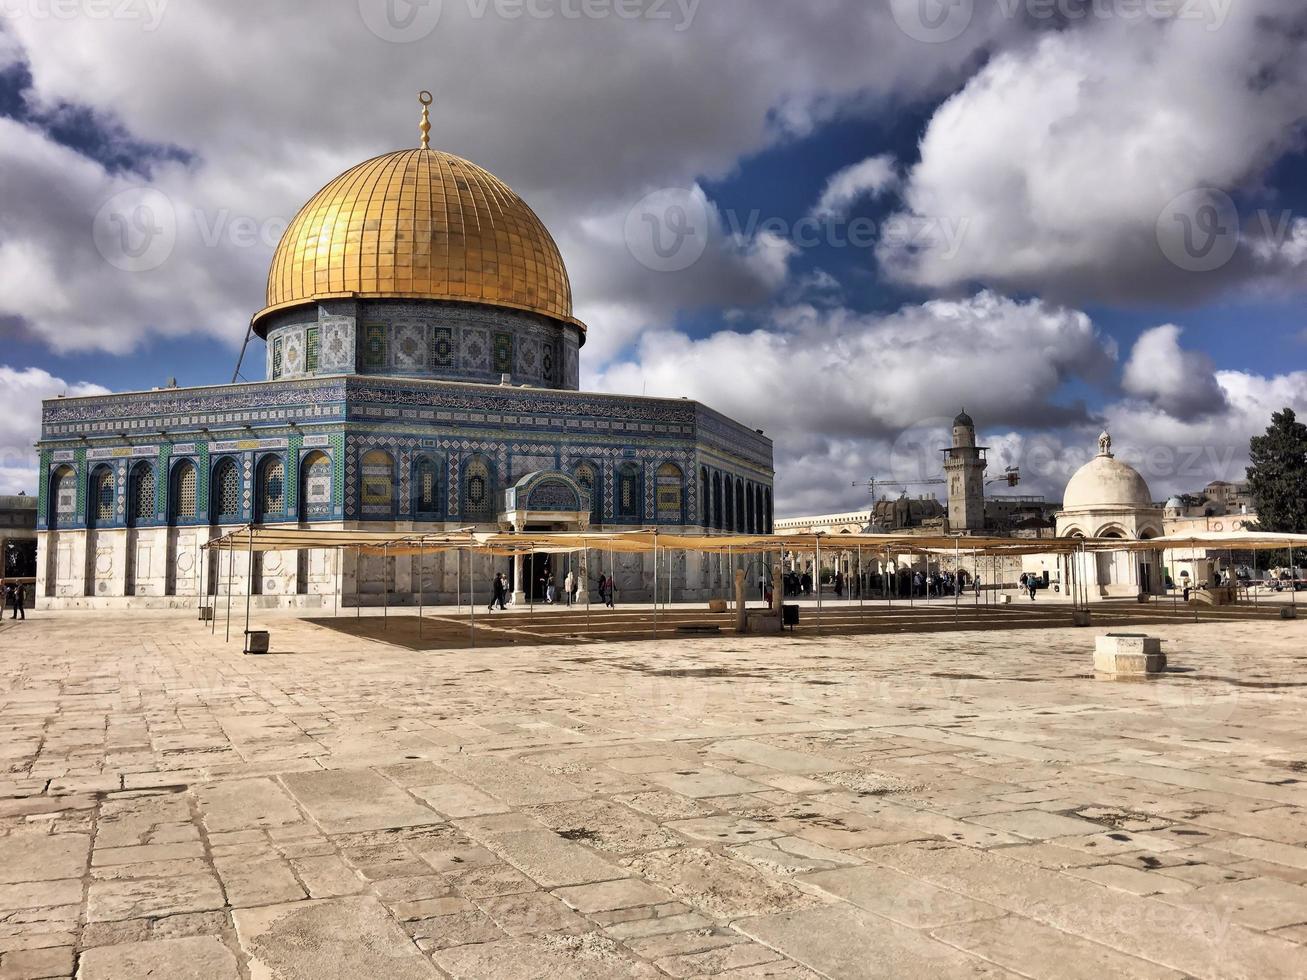 uma vista da cúpula da rocha em jerusalém foto